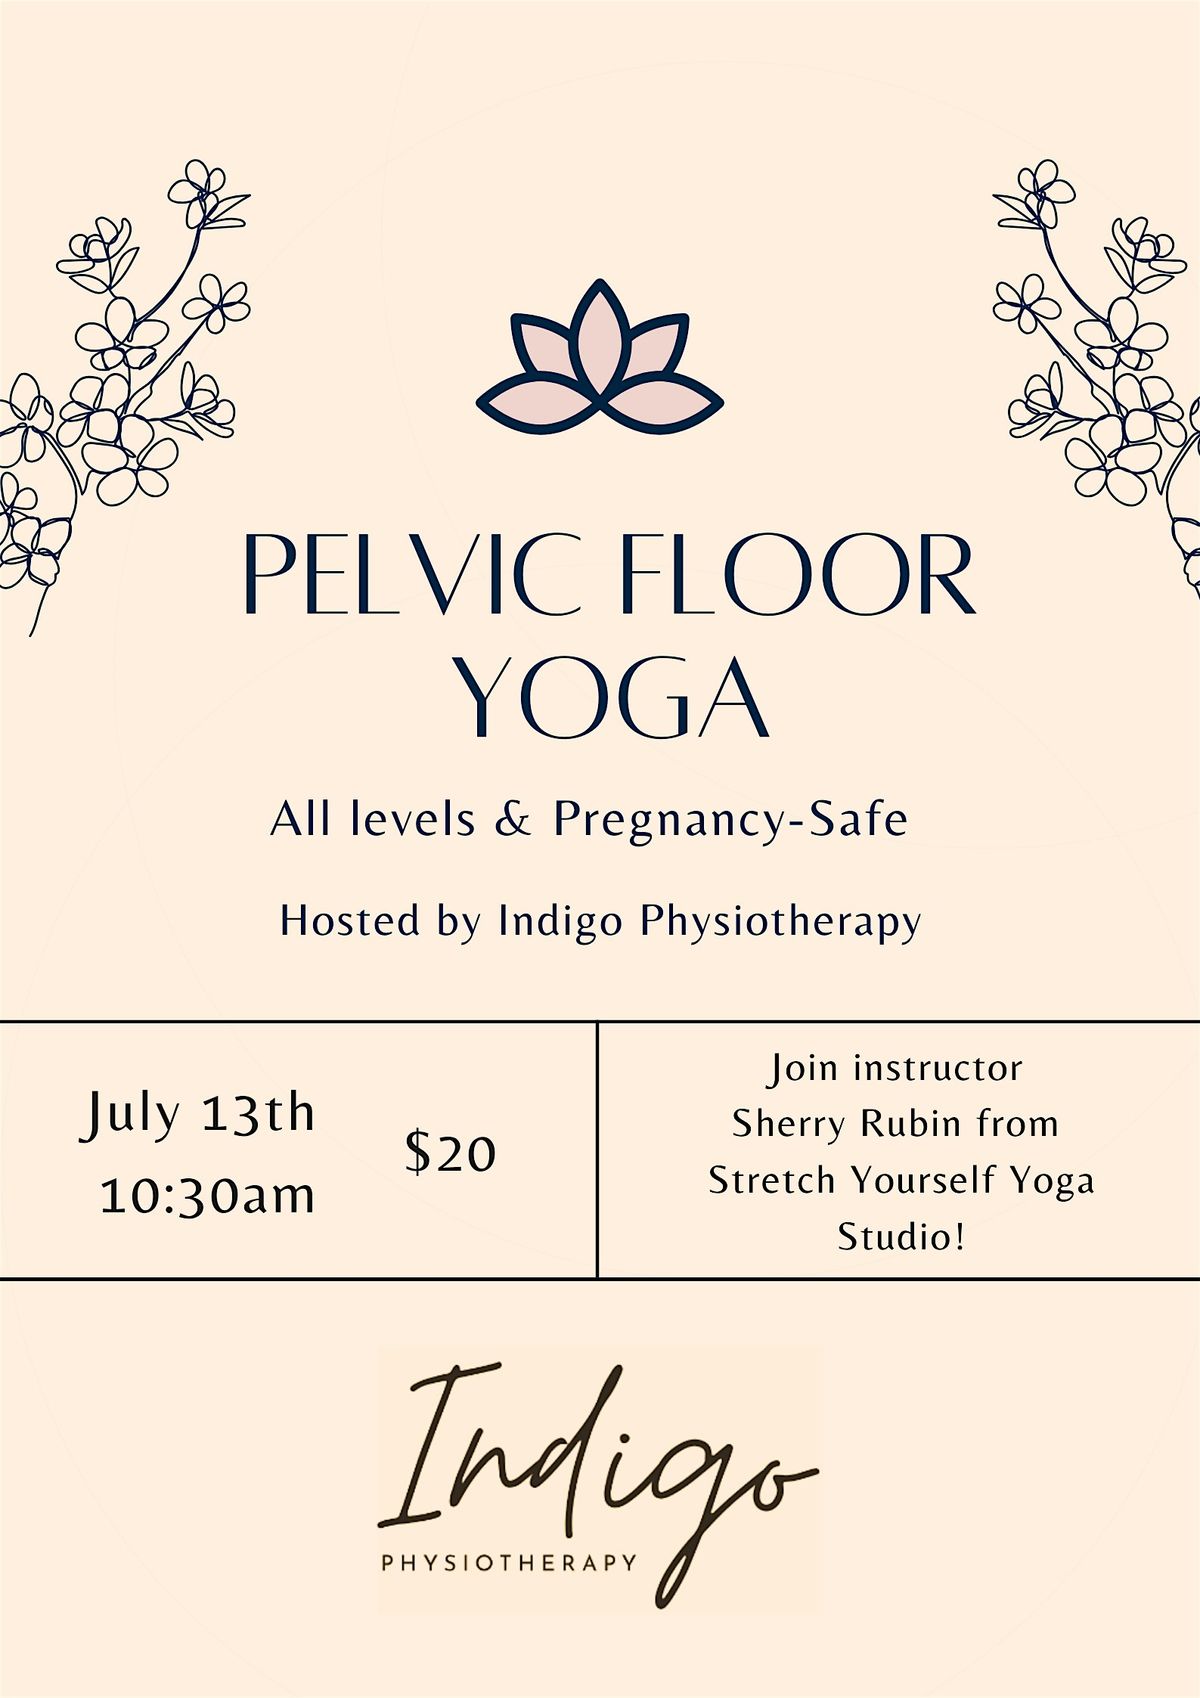 Pelvic floor yoga at Indigo Physiotherapy in Cabin John Mall